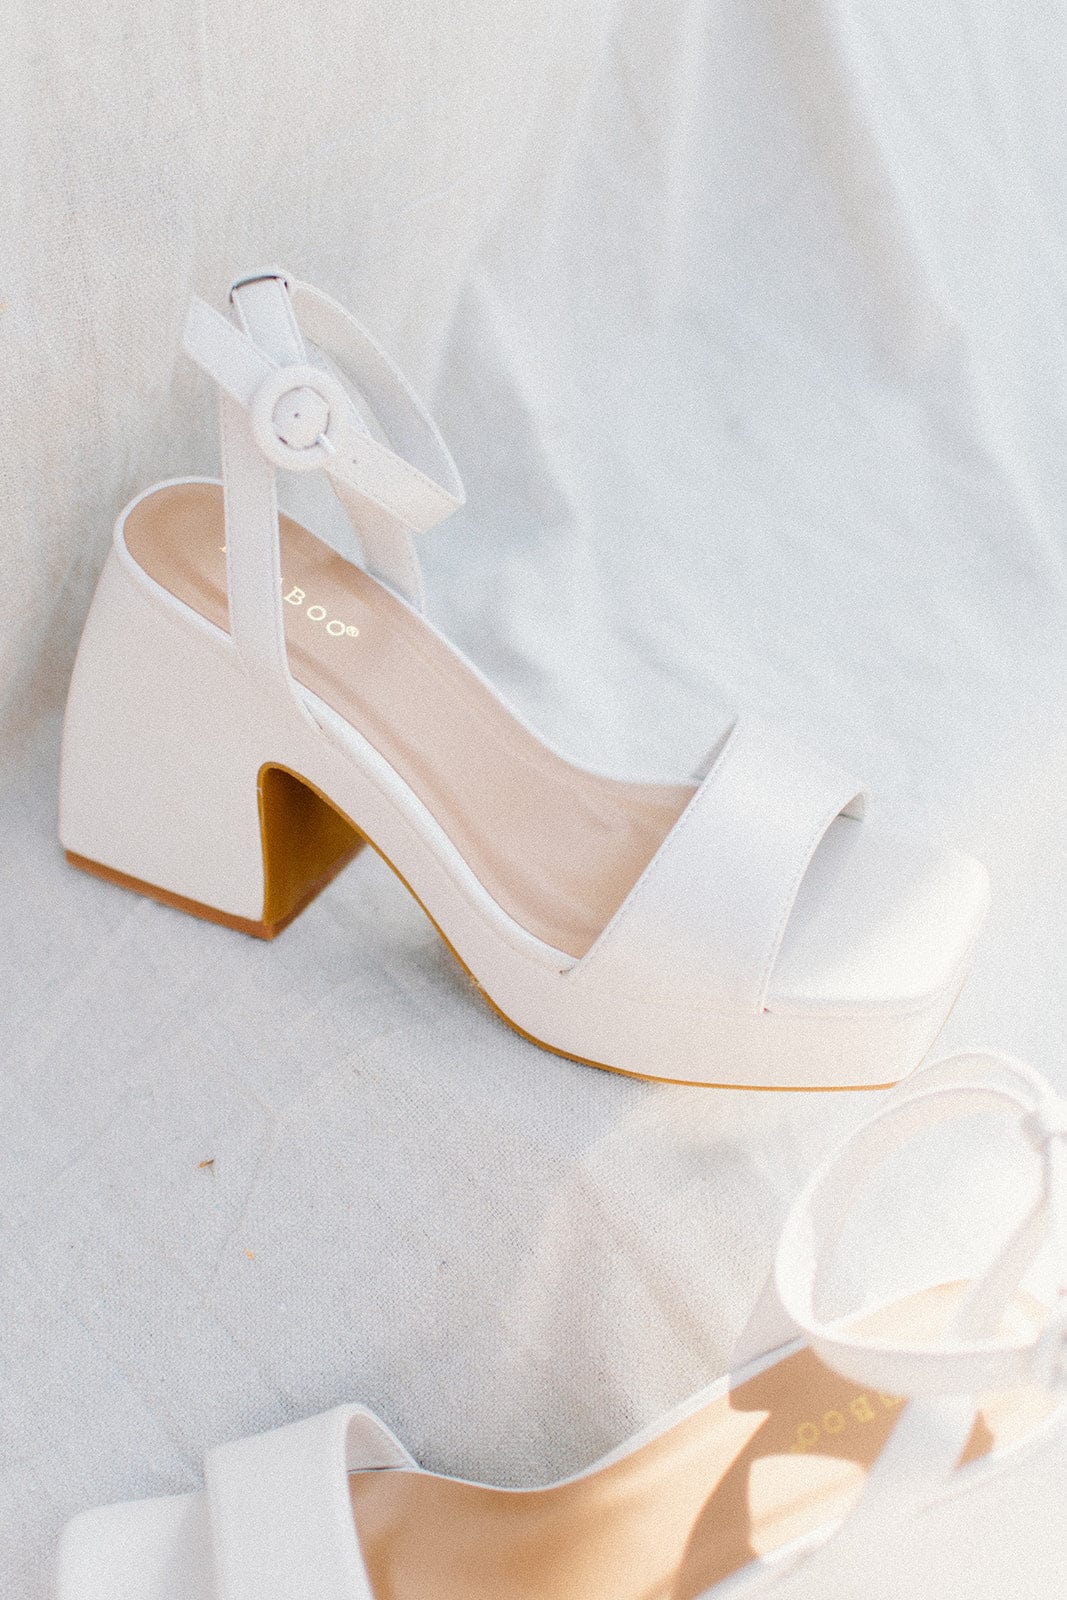 Gracie - Ivory Platform Wedding Shoes | Georgies Bridal Shoes